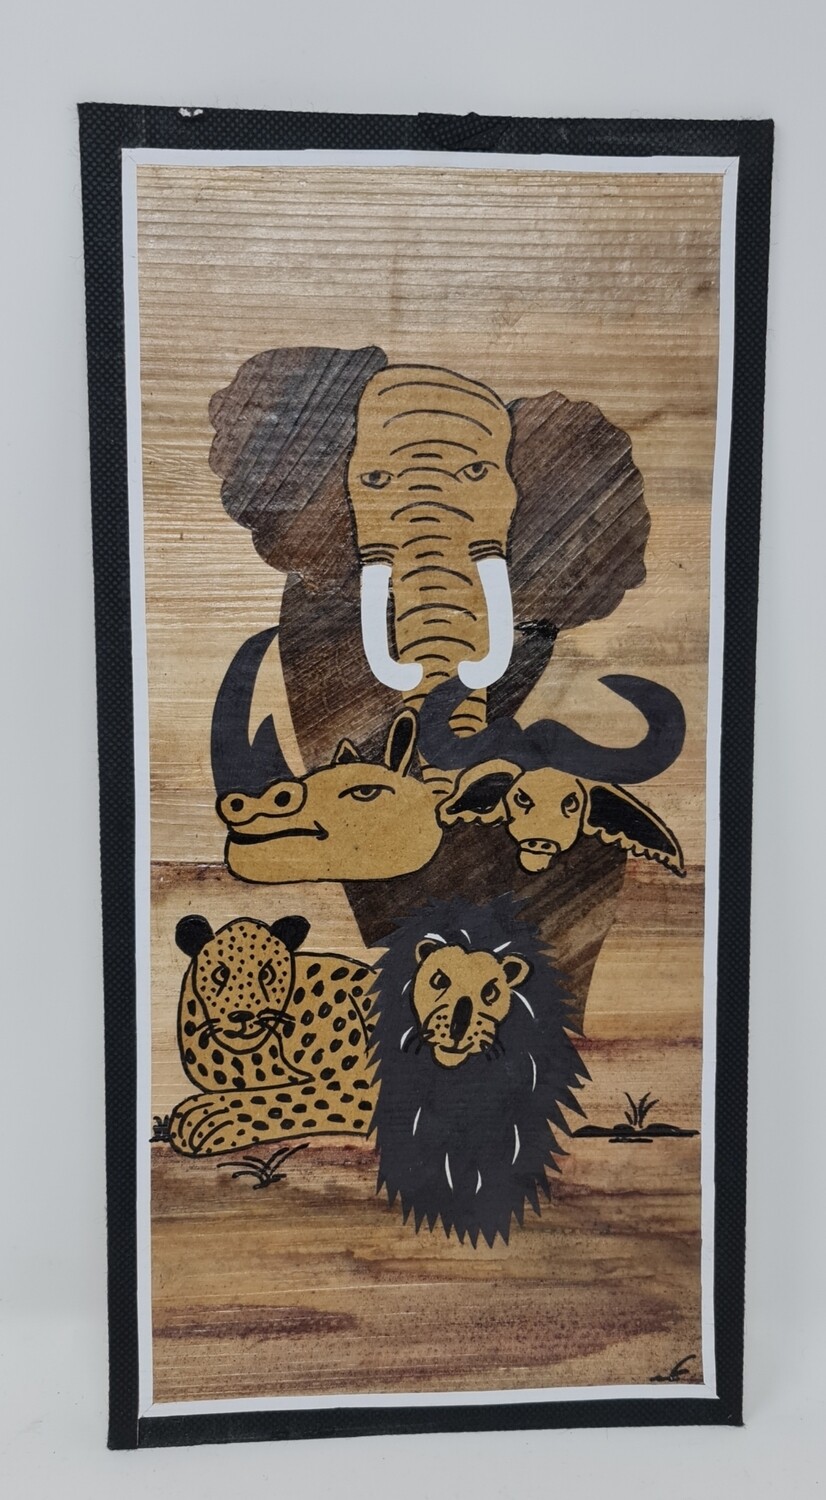 African Banana Artwork - Big Five Tarangire